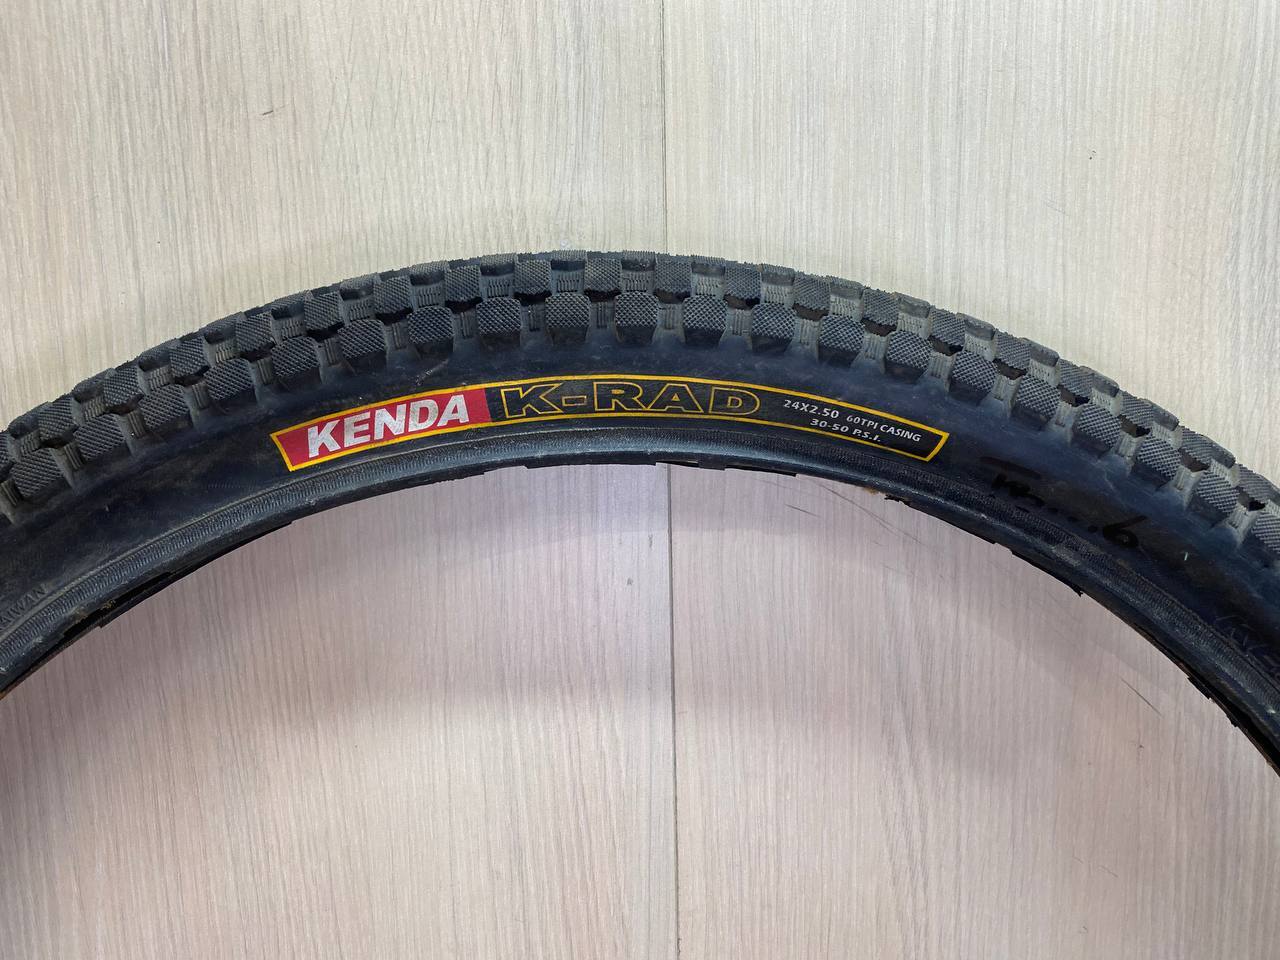 K rad. Kenda k905, k-rad,. Kenda k rad логотип. Велосипед Welt Kenda. Покрышки для дрифта на велосипед MAXPRO 20×2.35 радиус колёс купить.